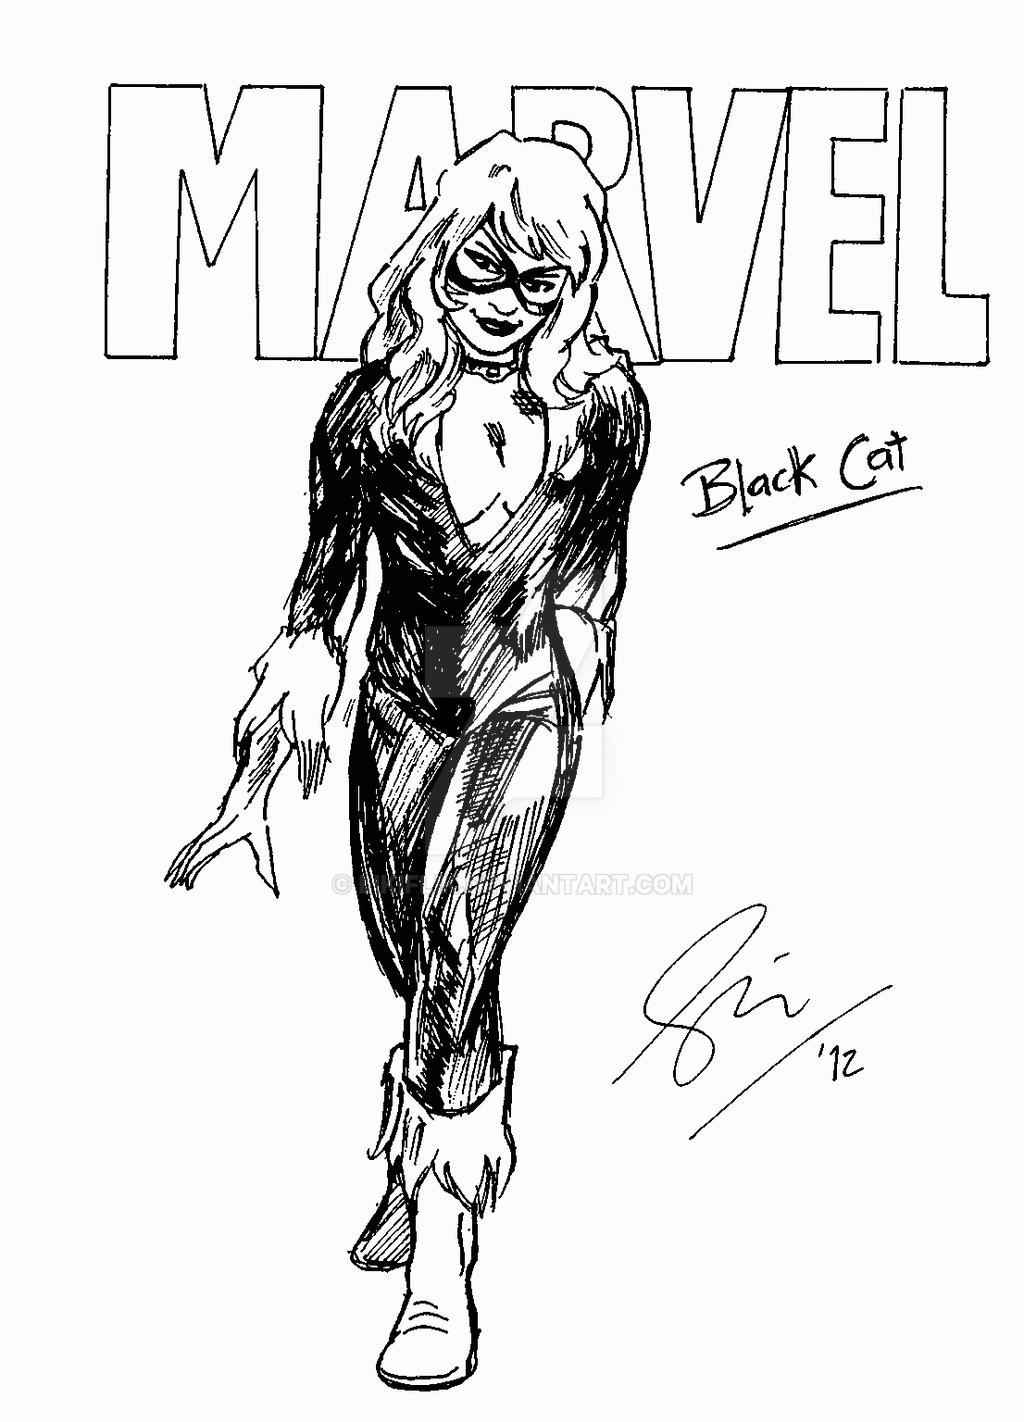 Black Cat Marvel by Likiflik on DeviantArt